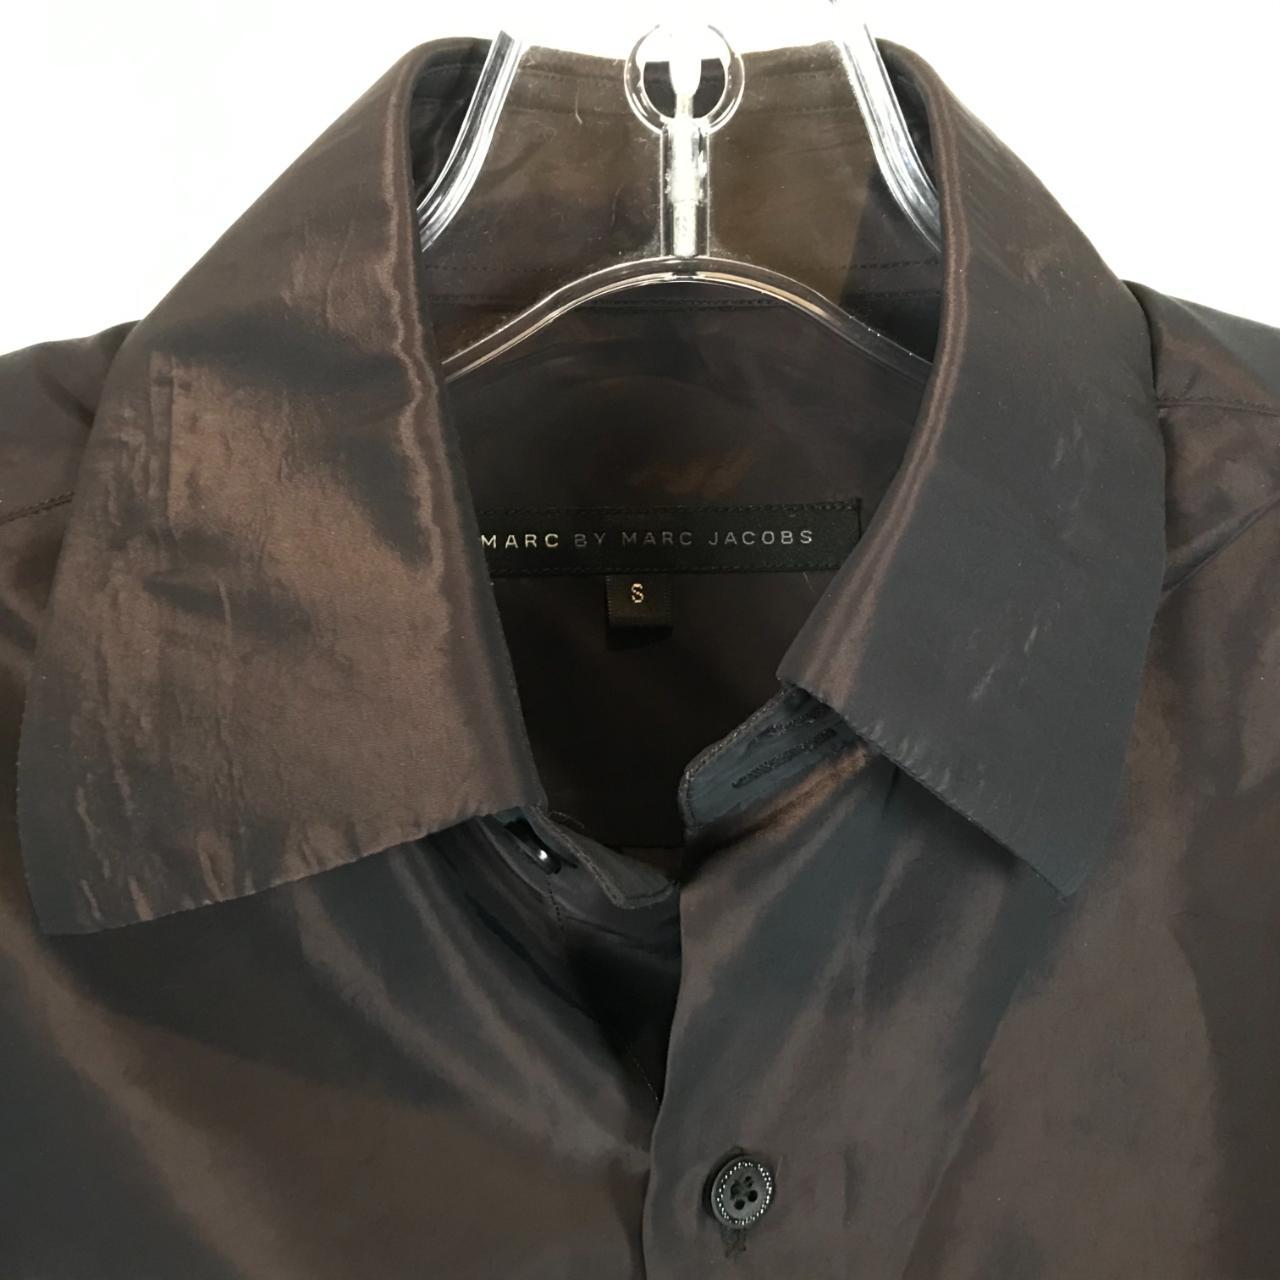 Product Image 2 - Light Iridescent Dress Shirt
Marc by